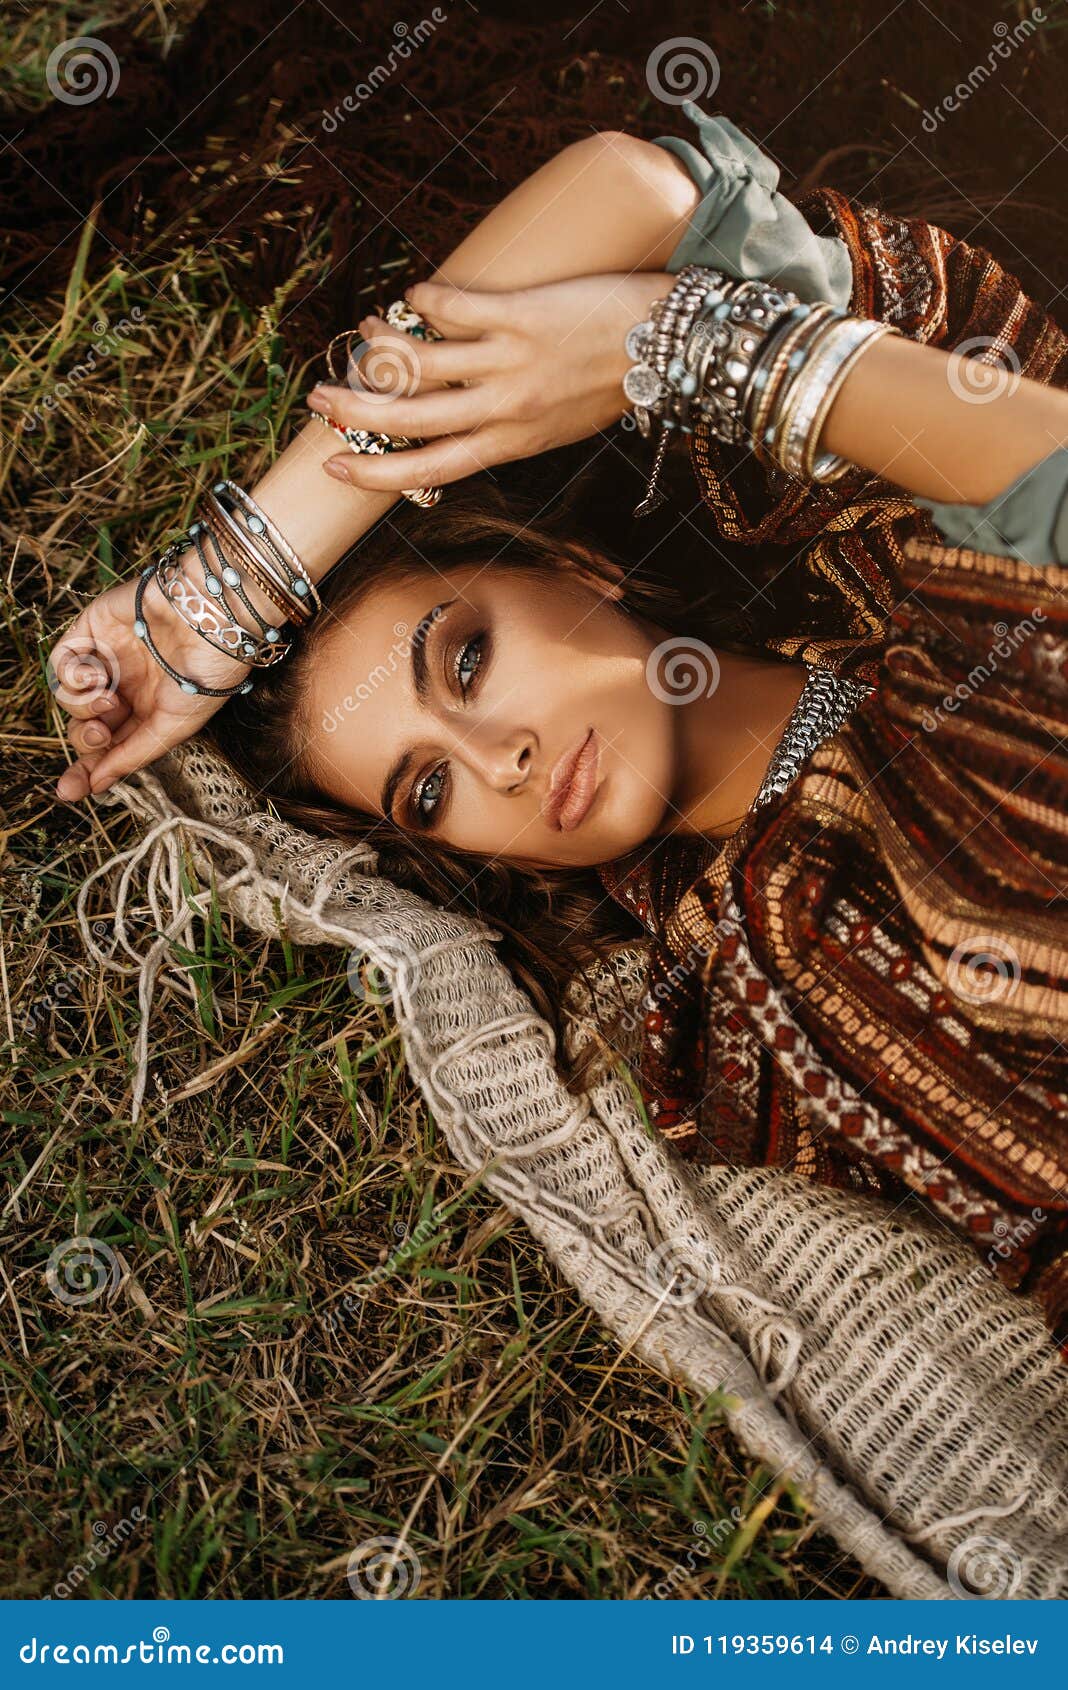 Lying hippie girl stock photo. Image of freedom, bangles - 119359614